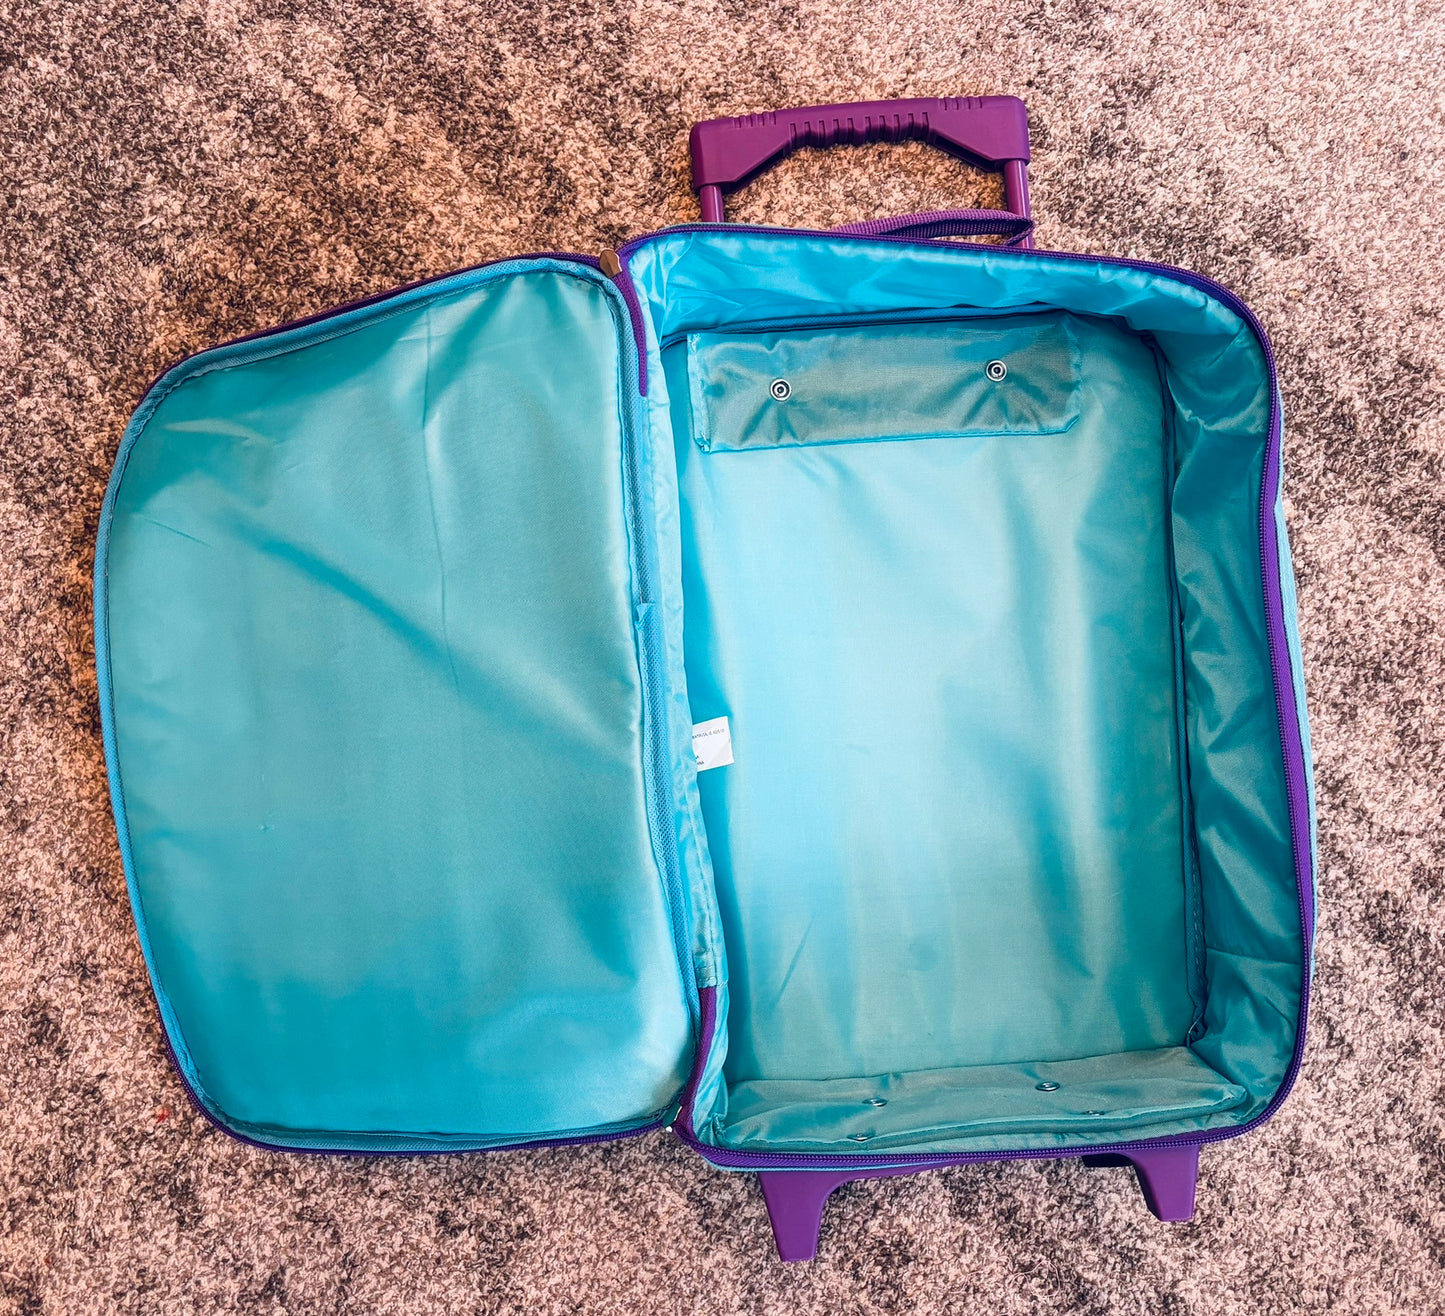 Disney Princess Roller Bag Suitcase Teal Purple